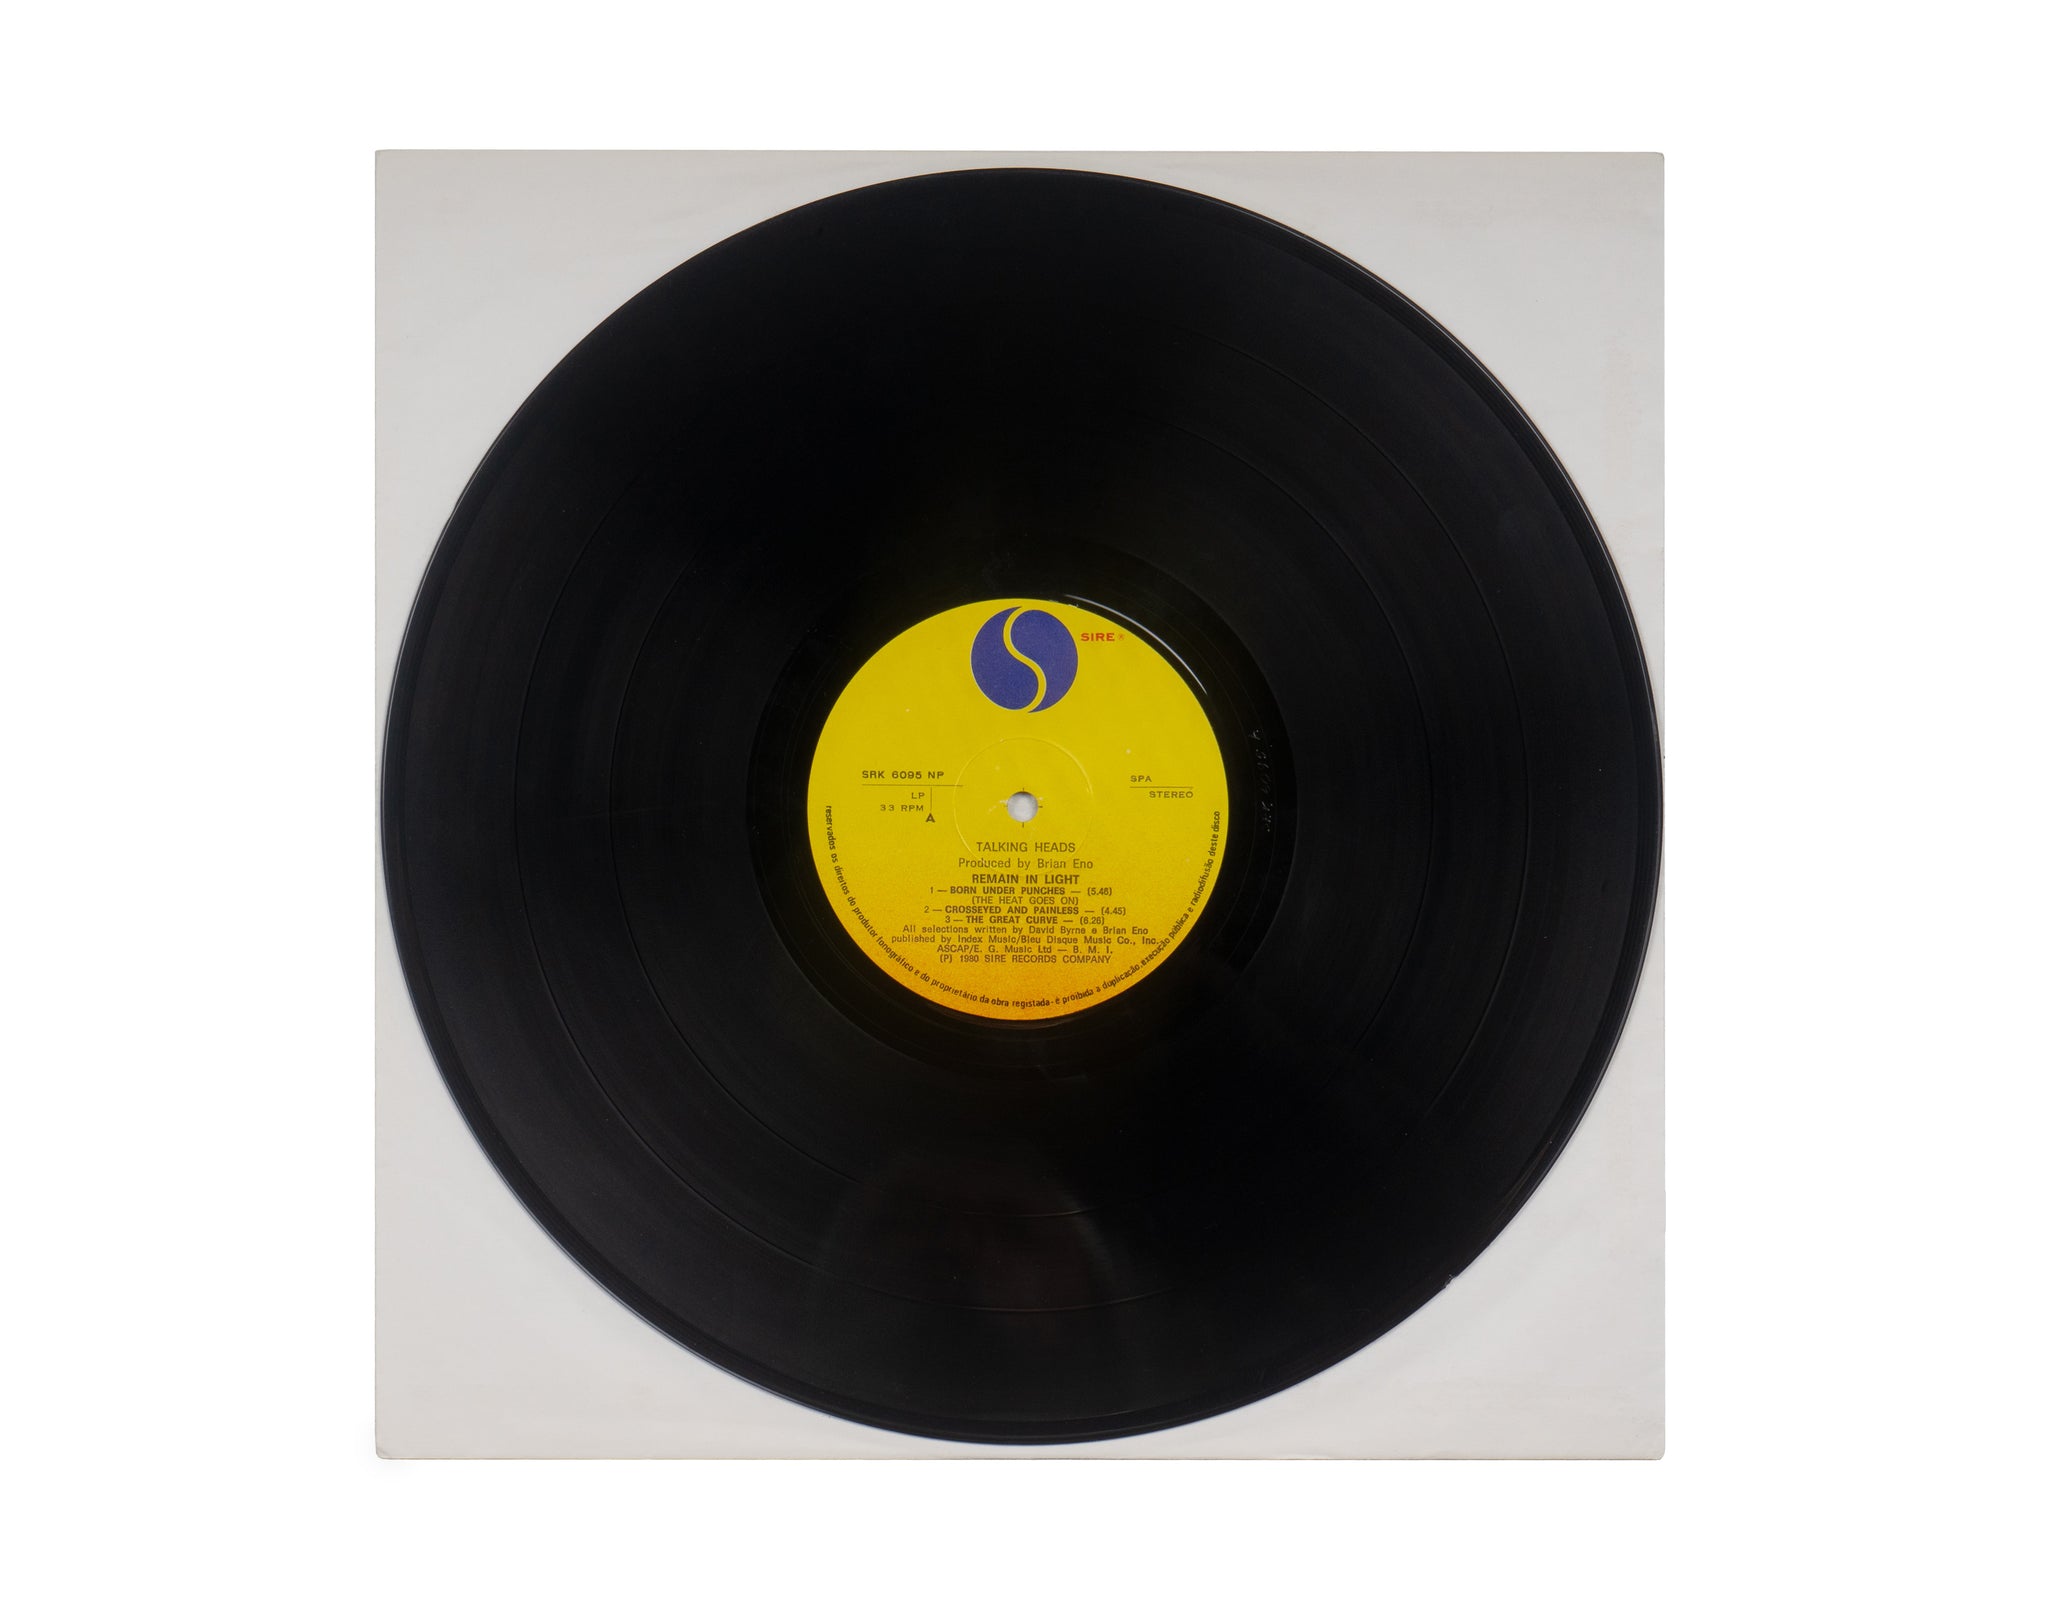 LP Talking Heads – Remain in Light (Preloved*)